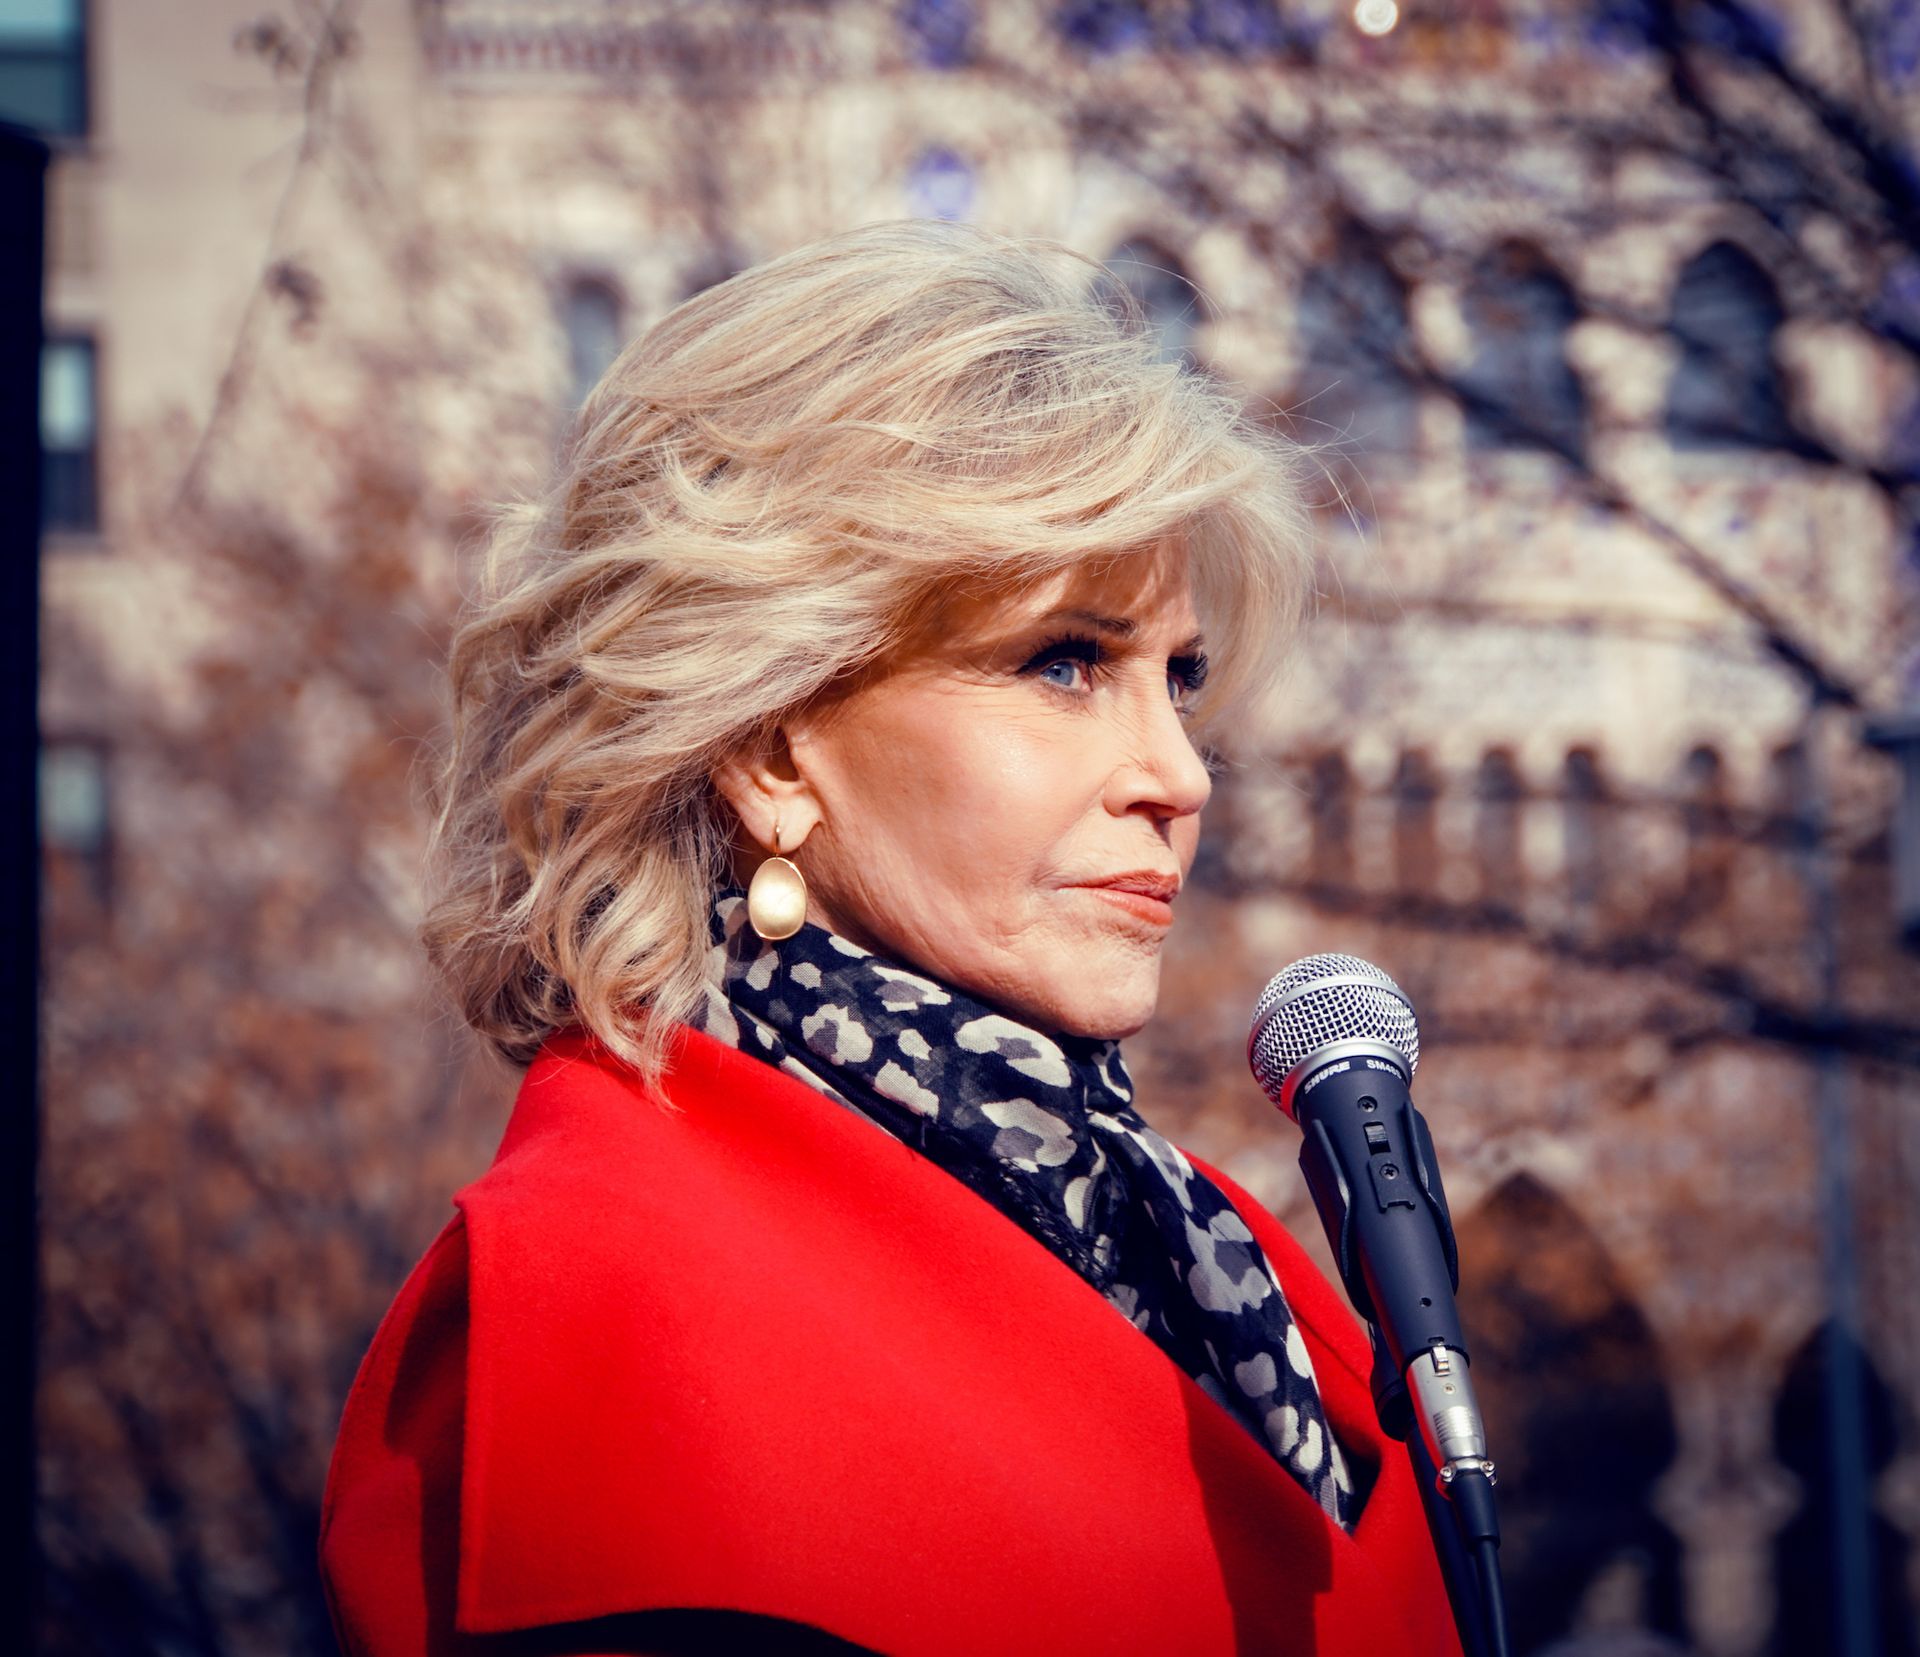 Jane Fonda at a rally in Washington, DC Photo by Ted Eytan, via Wikimedia/Flickr